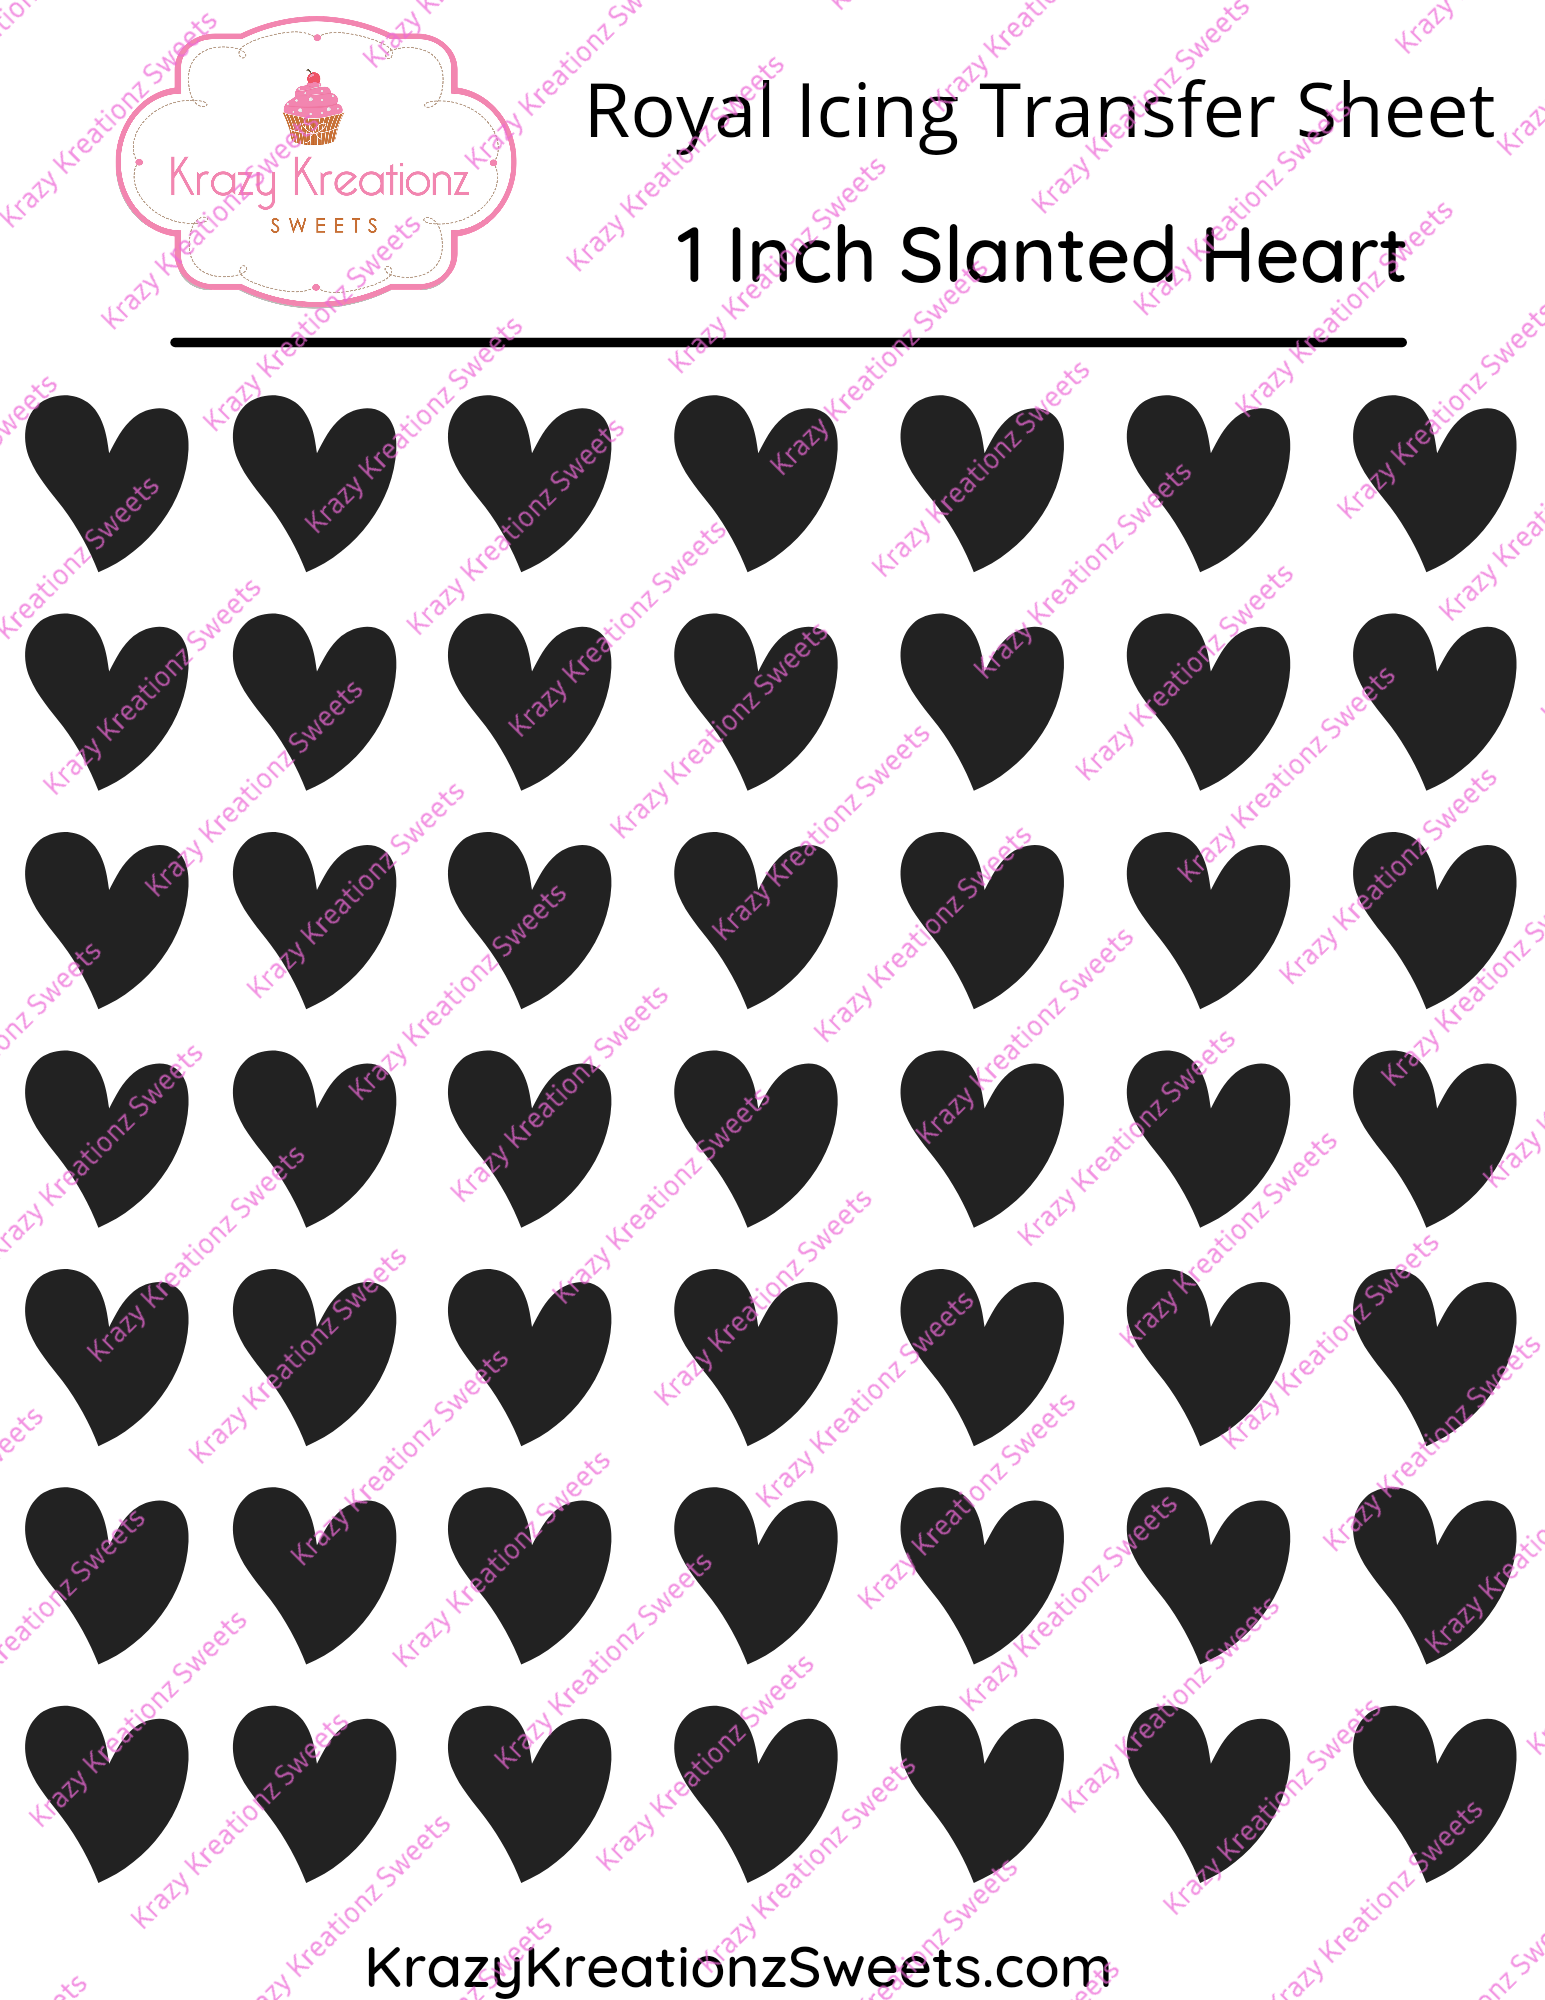 1 inch Slanted Heart Royal Icing Transfer Sheet